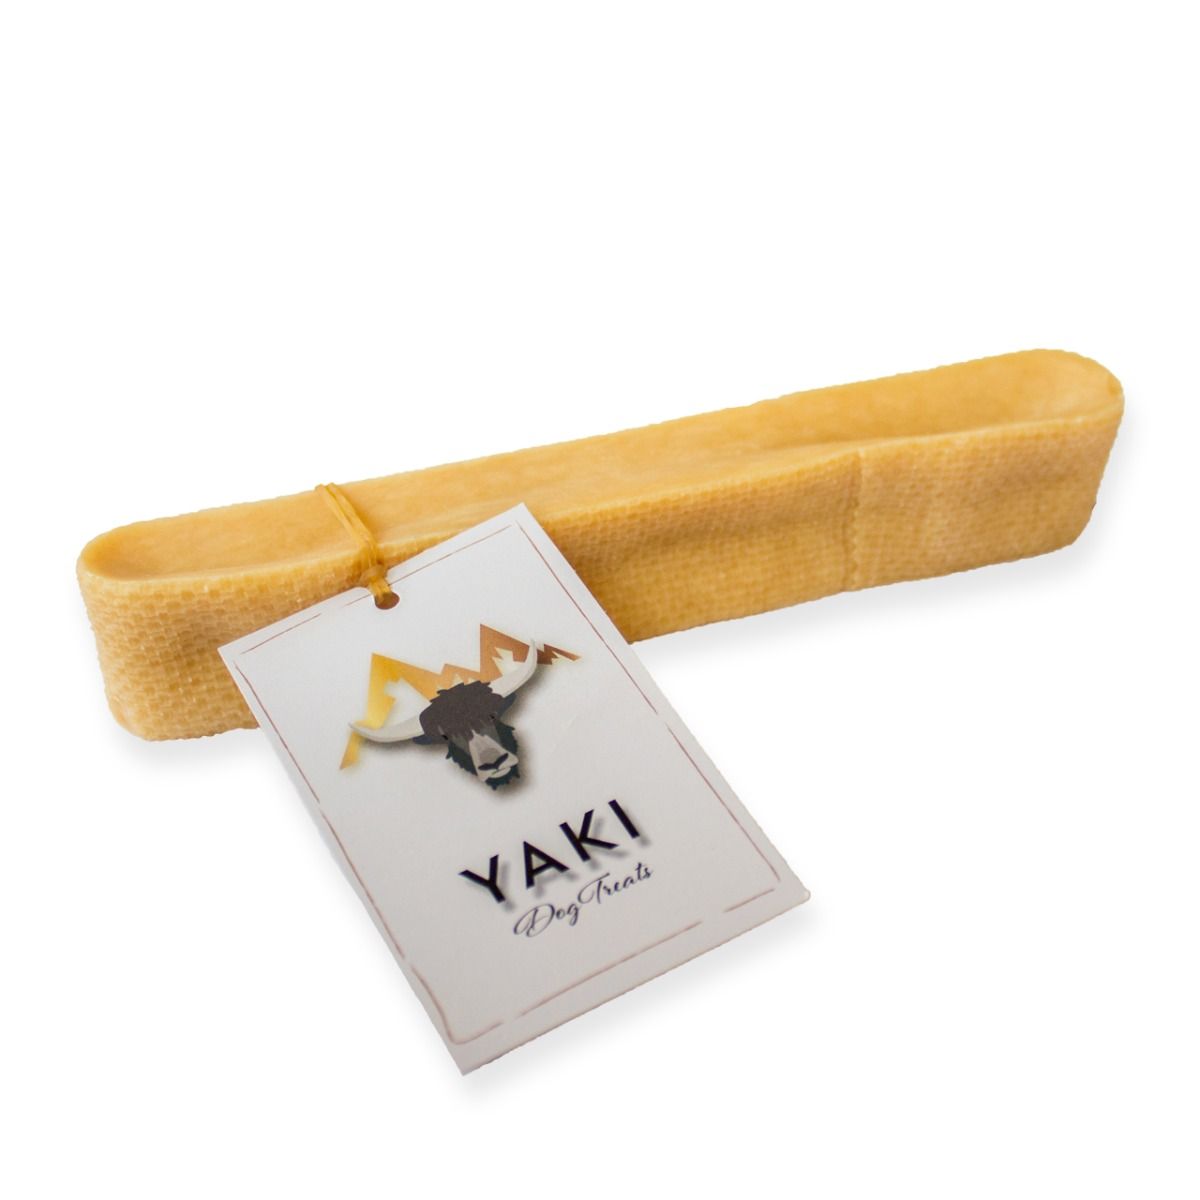 Yaki - Cheese Dog snack 140-149g XL - (01-503)